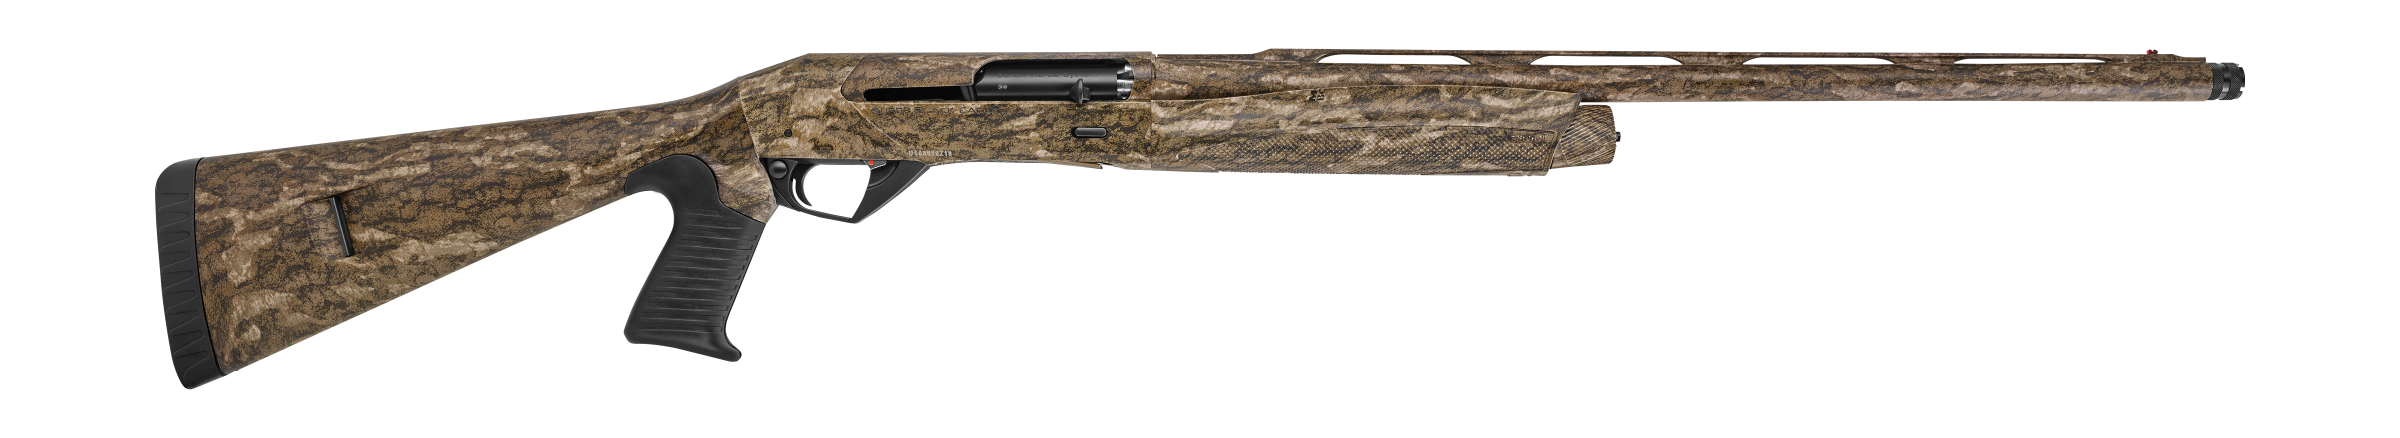 Benelli Super Black Eagle 3 SteadyGrip 12ga 3.5 Mossy Oak Bottomland 24  Barrel Semi-Automatic Shotgun #10352 - Dunns Sporting Goods